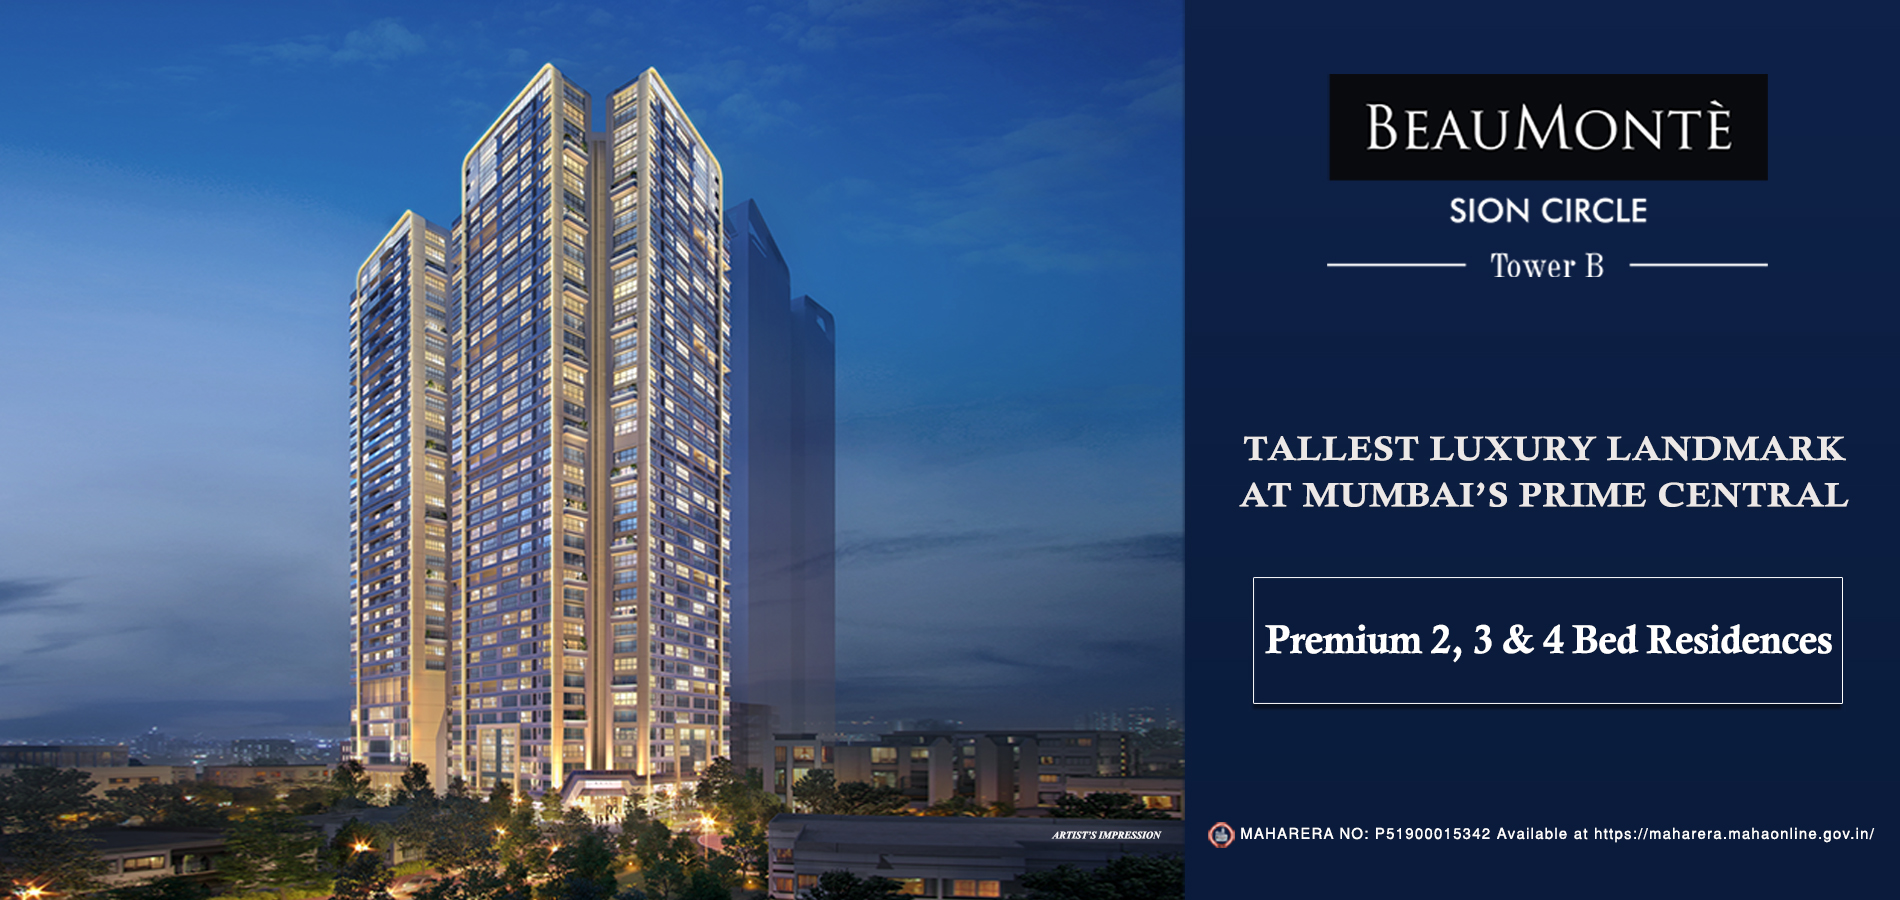 Sheth Beaumonte tallest luxury landmark at Mumbai' s prime central Update